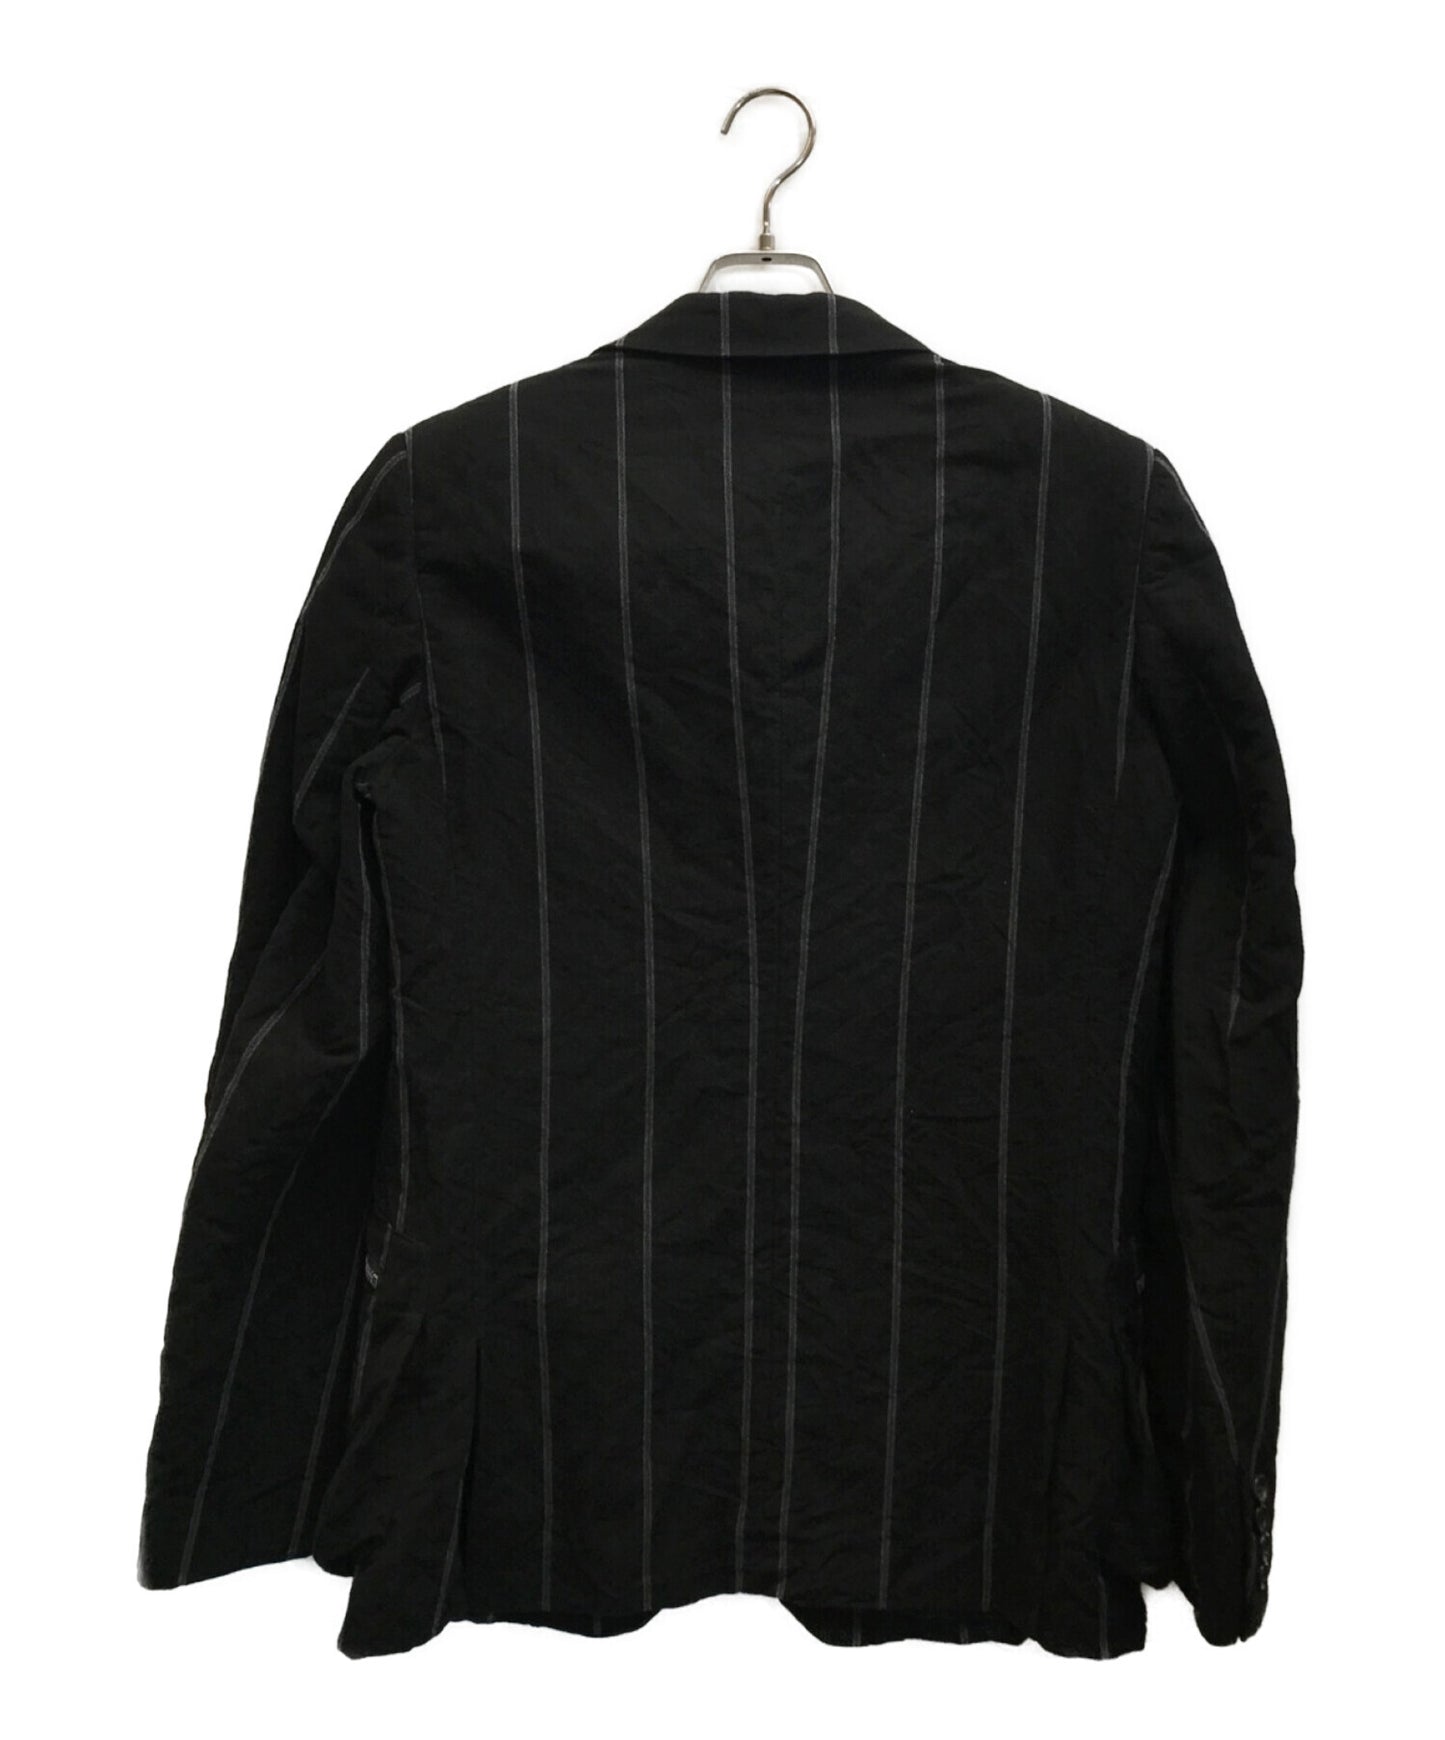 Comme des Garcons Homme Deux Linen 및 Cotton 주름 지퍼 포켓 재킷 주름진 테일러드 재킷 DK-J049 AD2022